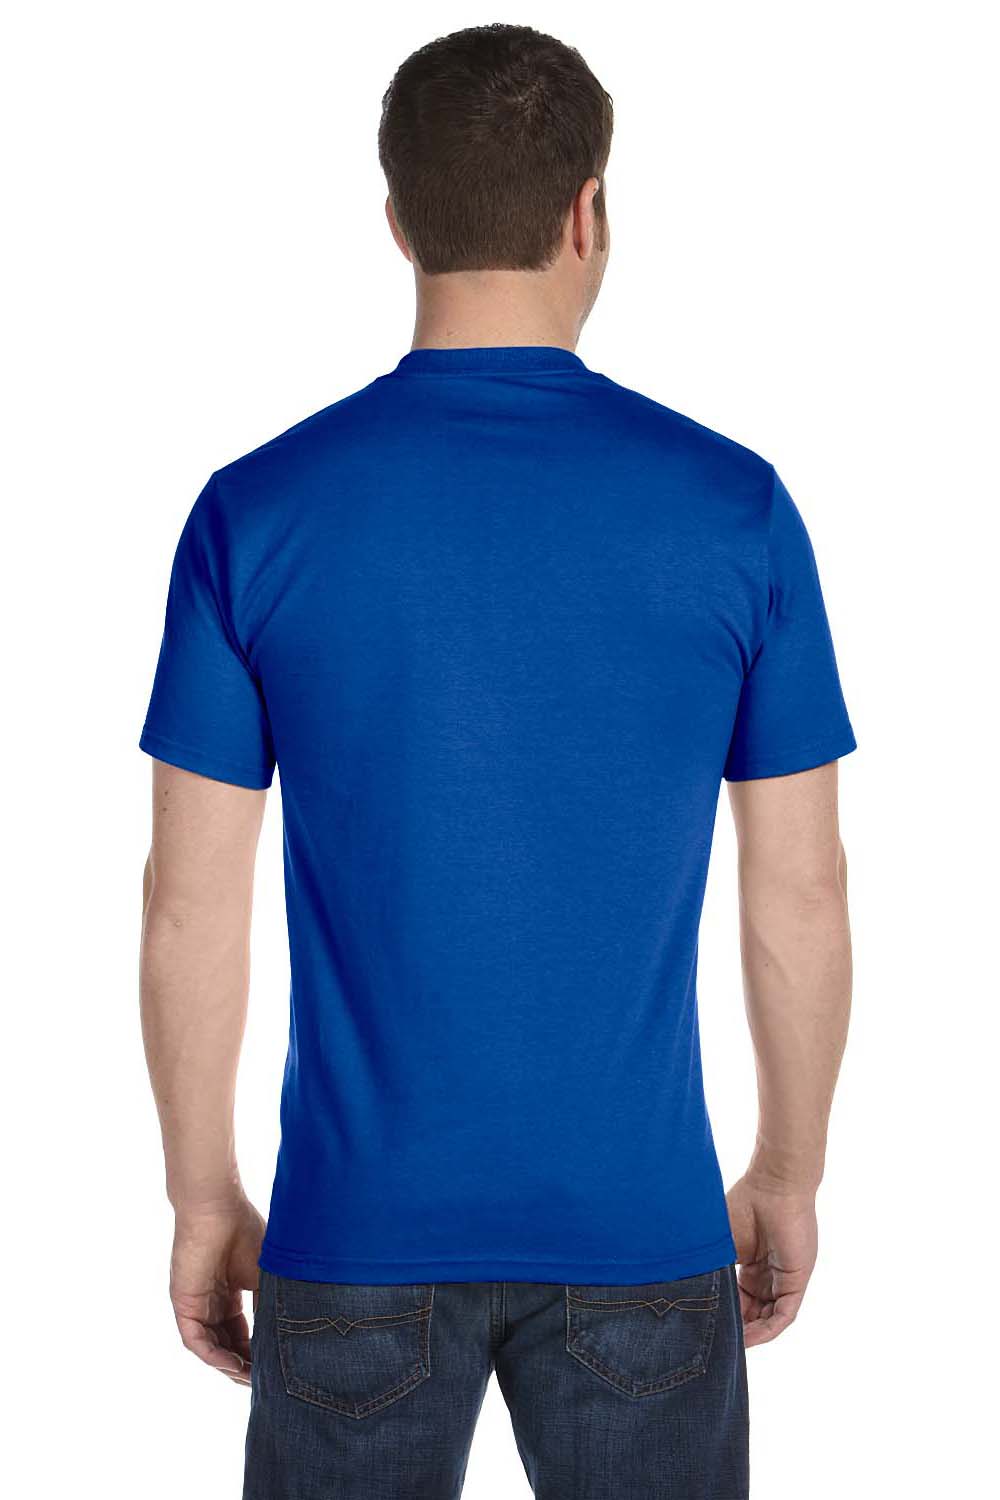 Gildan G800 Mens DryBlend Moisture Wicking Short Sleeve Crewneck T-Shirt Royal Blue Back